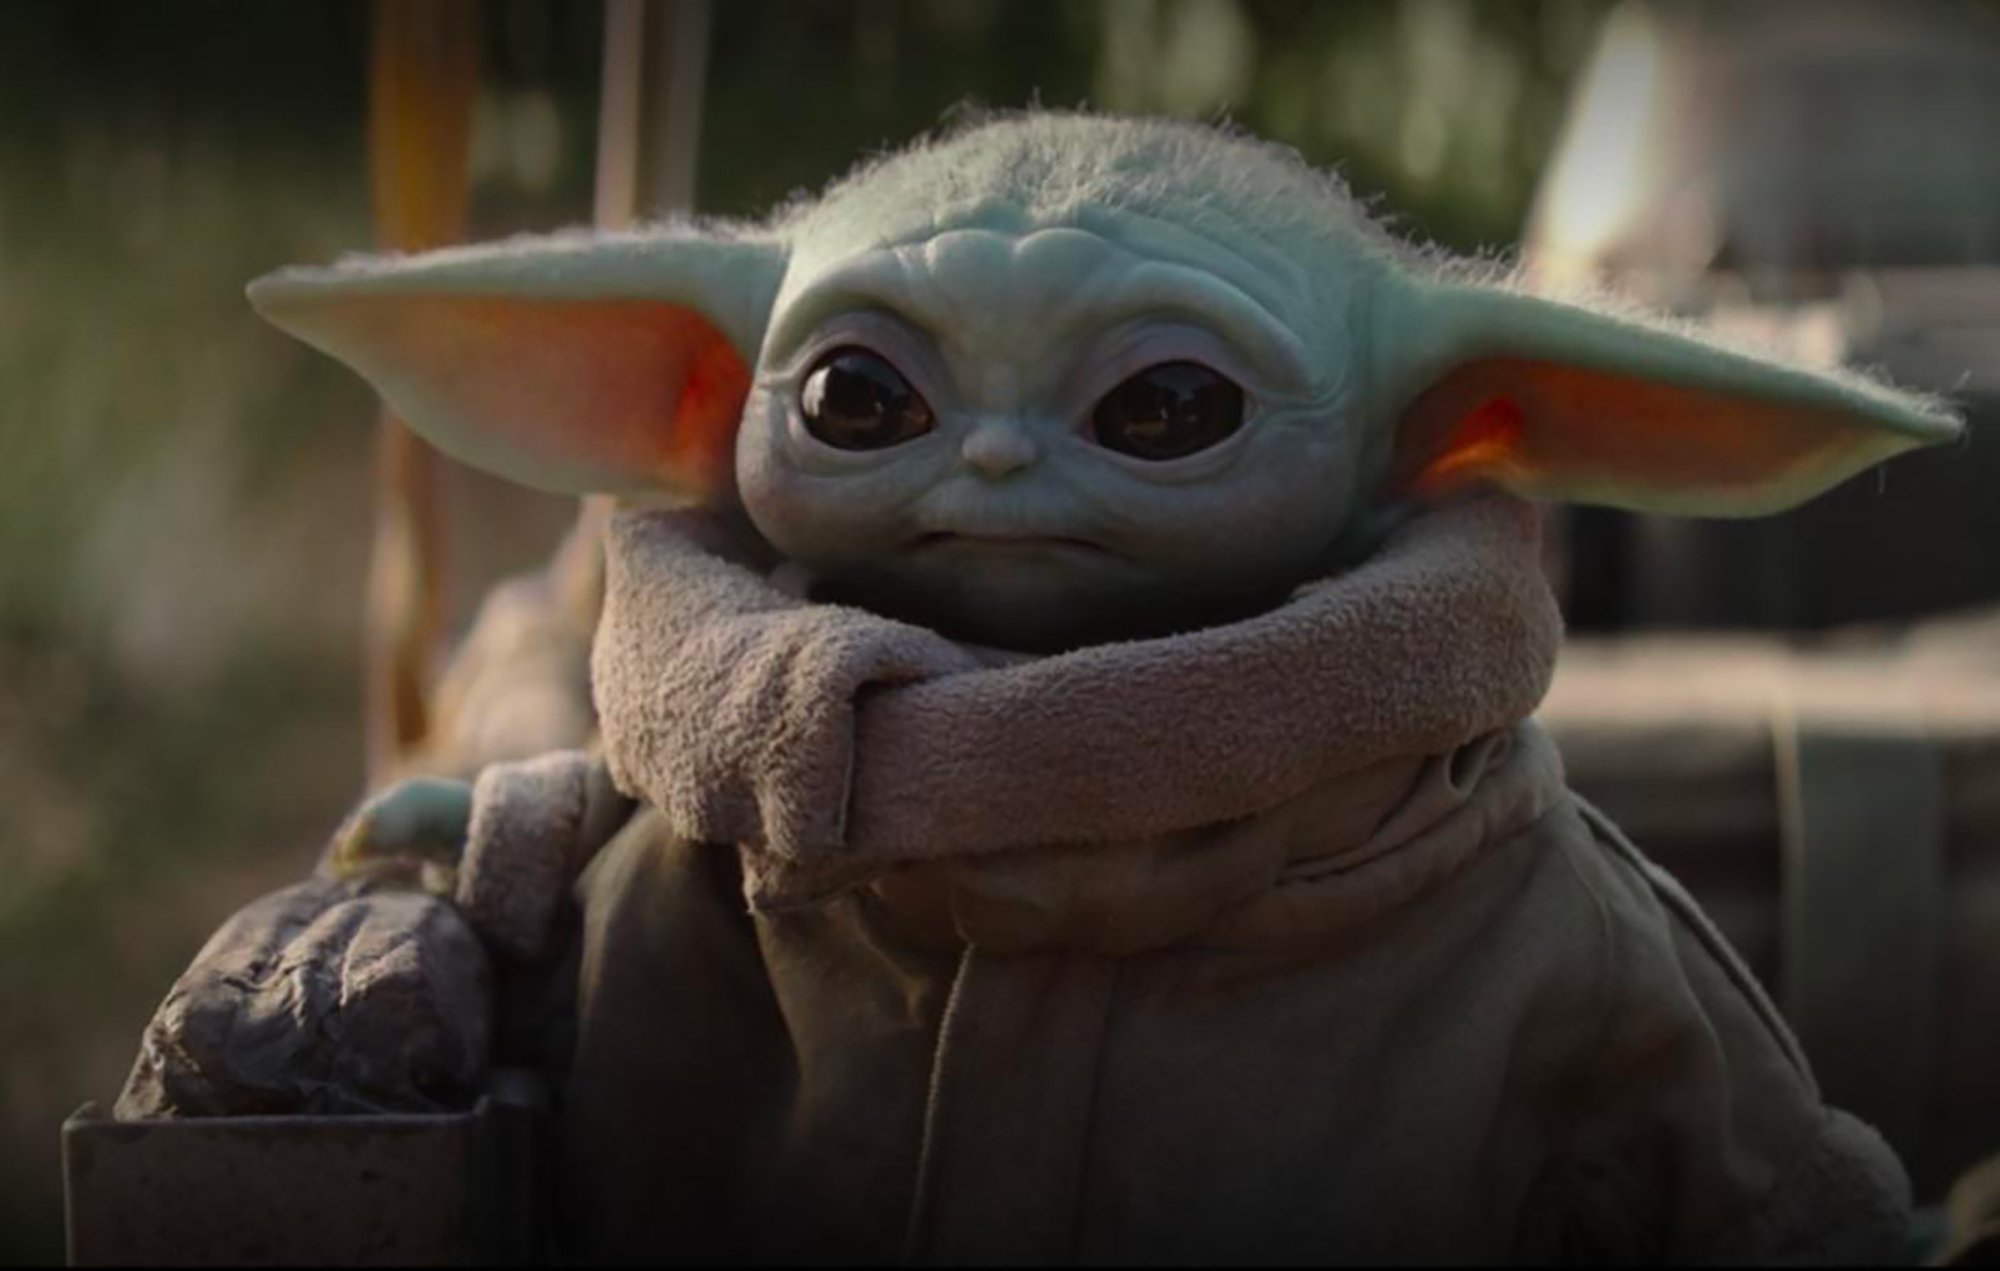 https://www.cheatsheet.com/wp-content/uploads/2019/12/Baby-Yoda-2.jpg?strip=all&quality=89